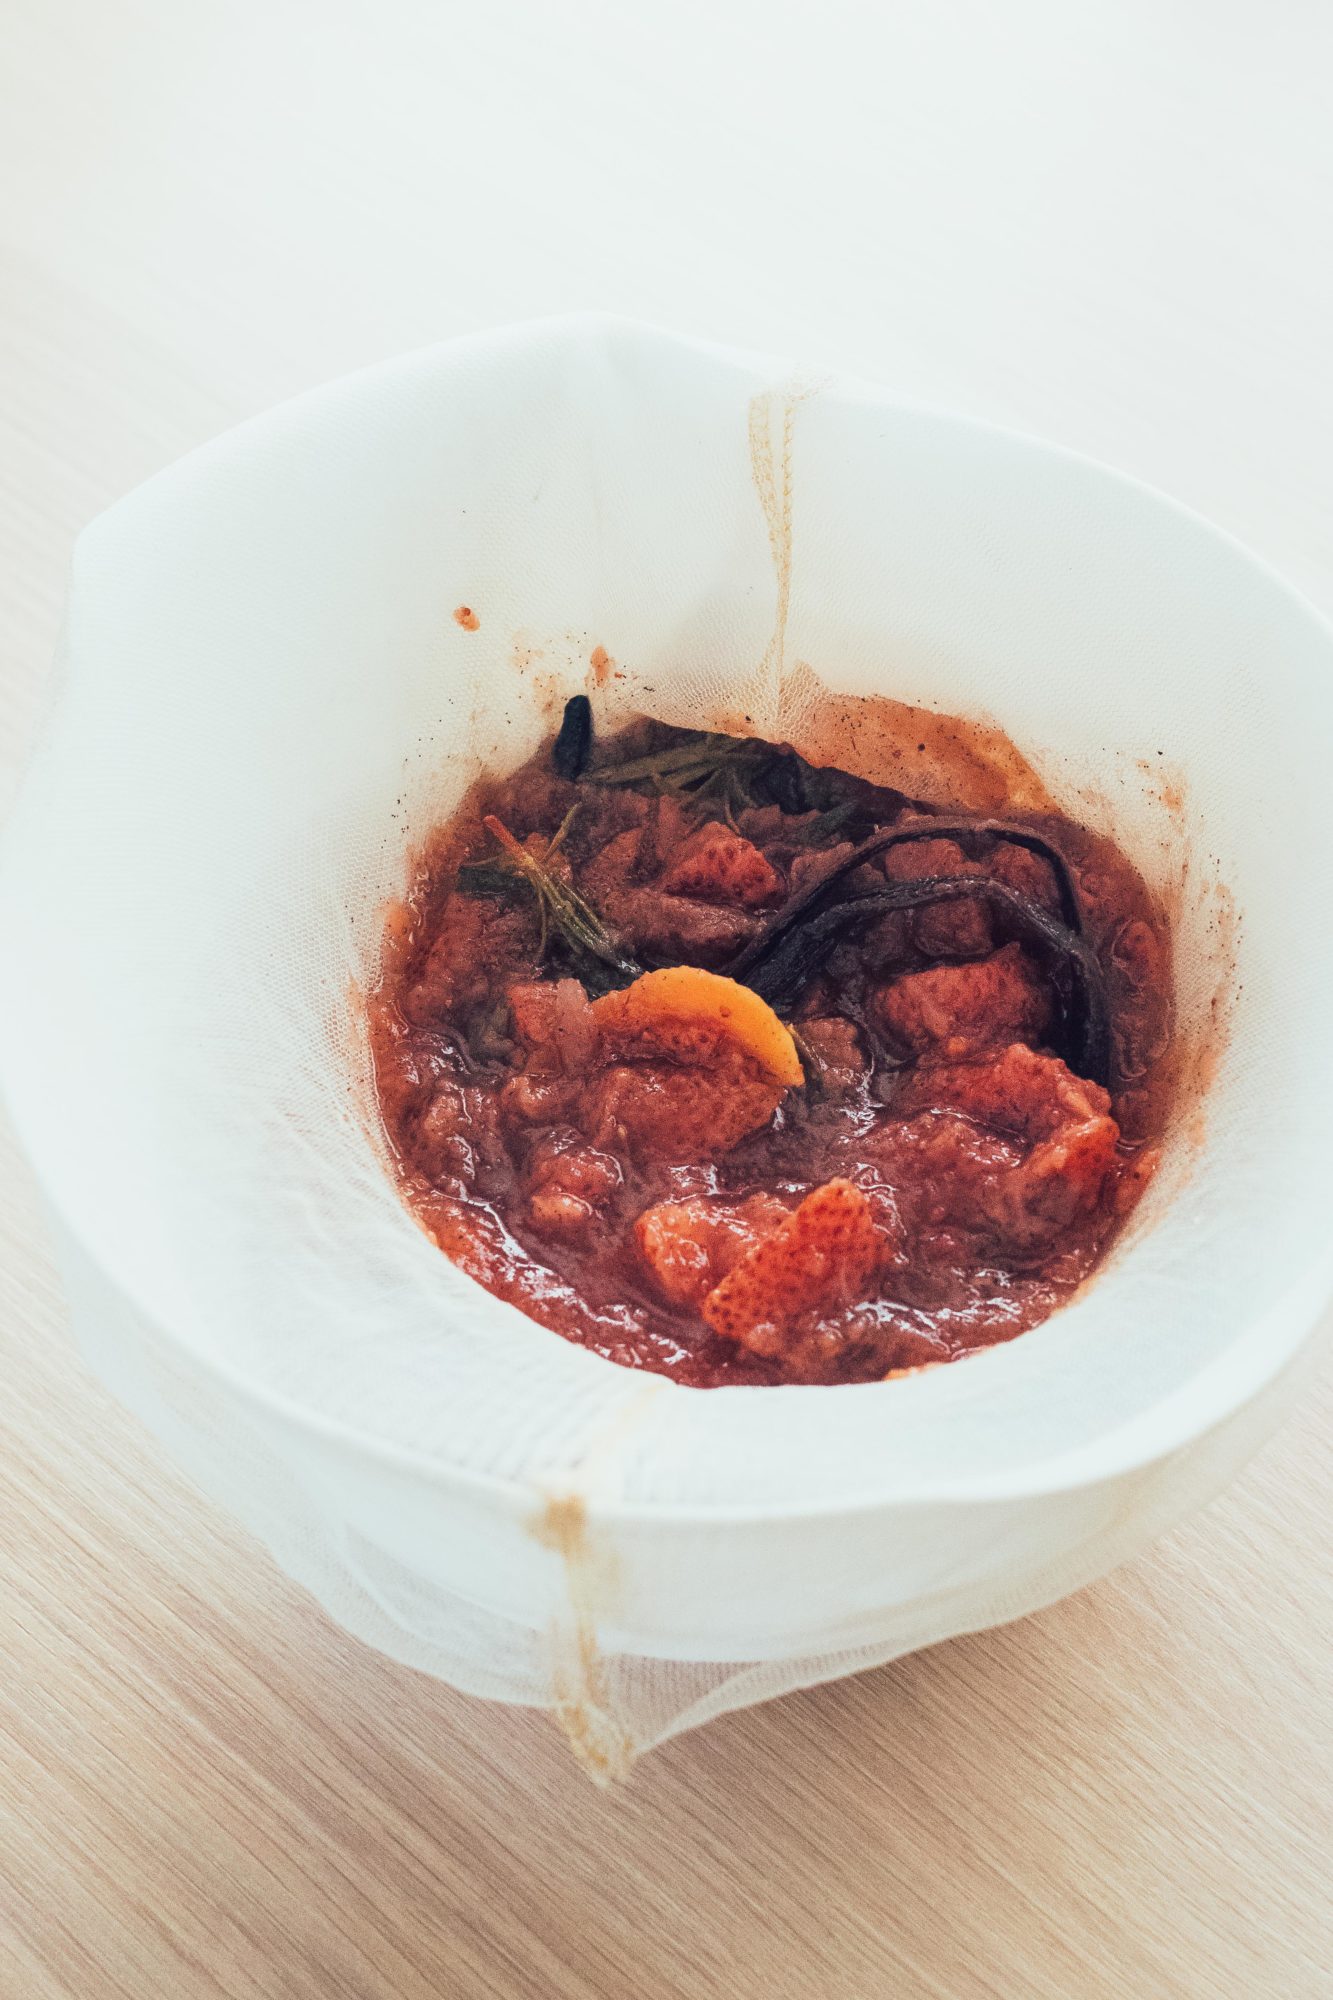 Strawberry Shrub Drinking Vinegar. An easy, probiotic DIY recipe that's paleo, healthy, gluten-free, dairy-free, whole30